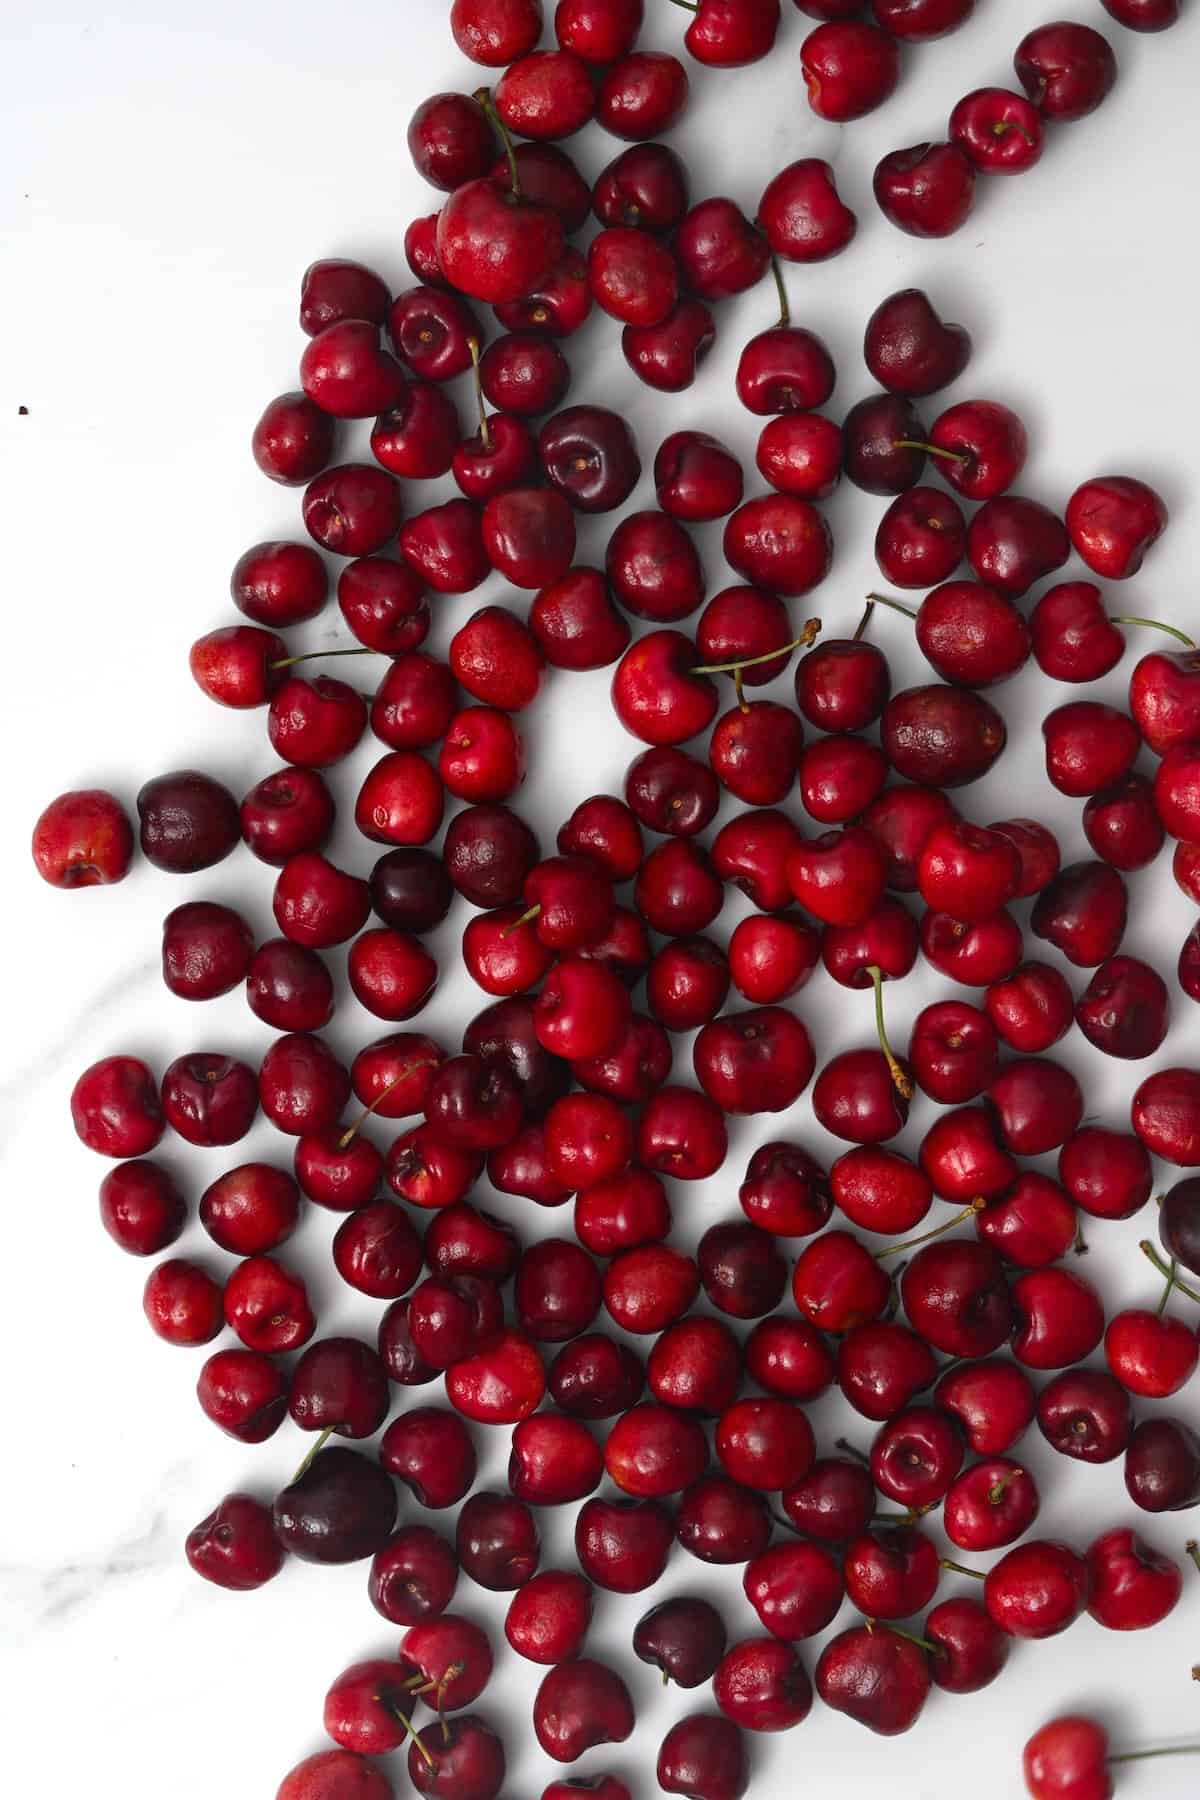 How To Make Cherry Juice (+ Pit Cherries